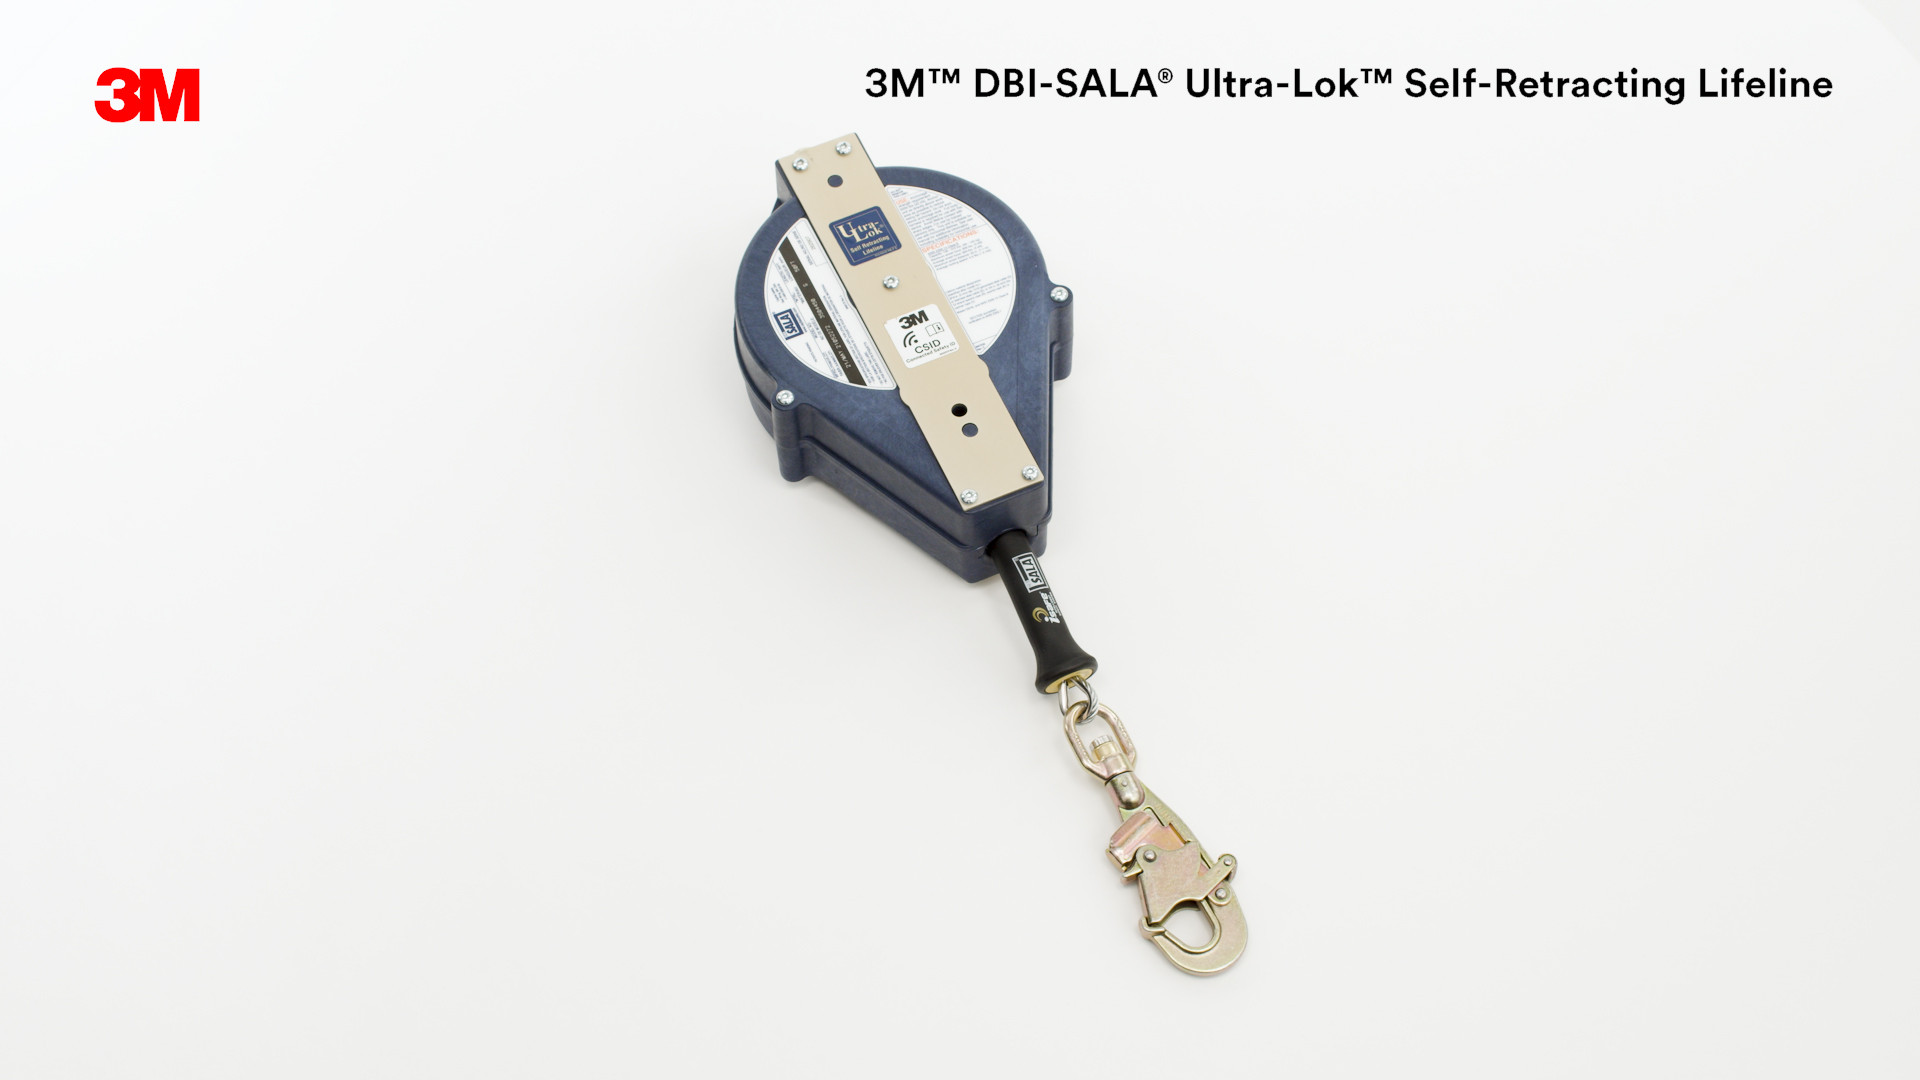 3M DBI-SALA Ultra-Lok 3-Way Retrieval Self-Retracting Lifeline